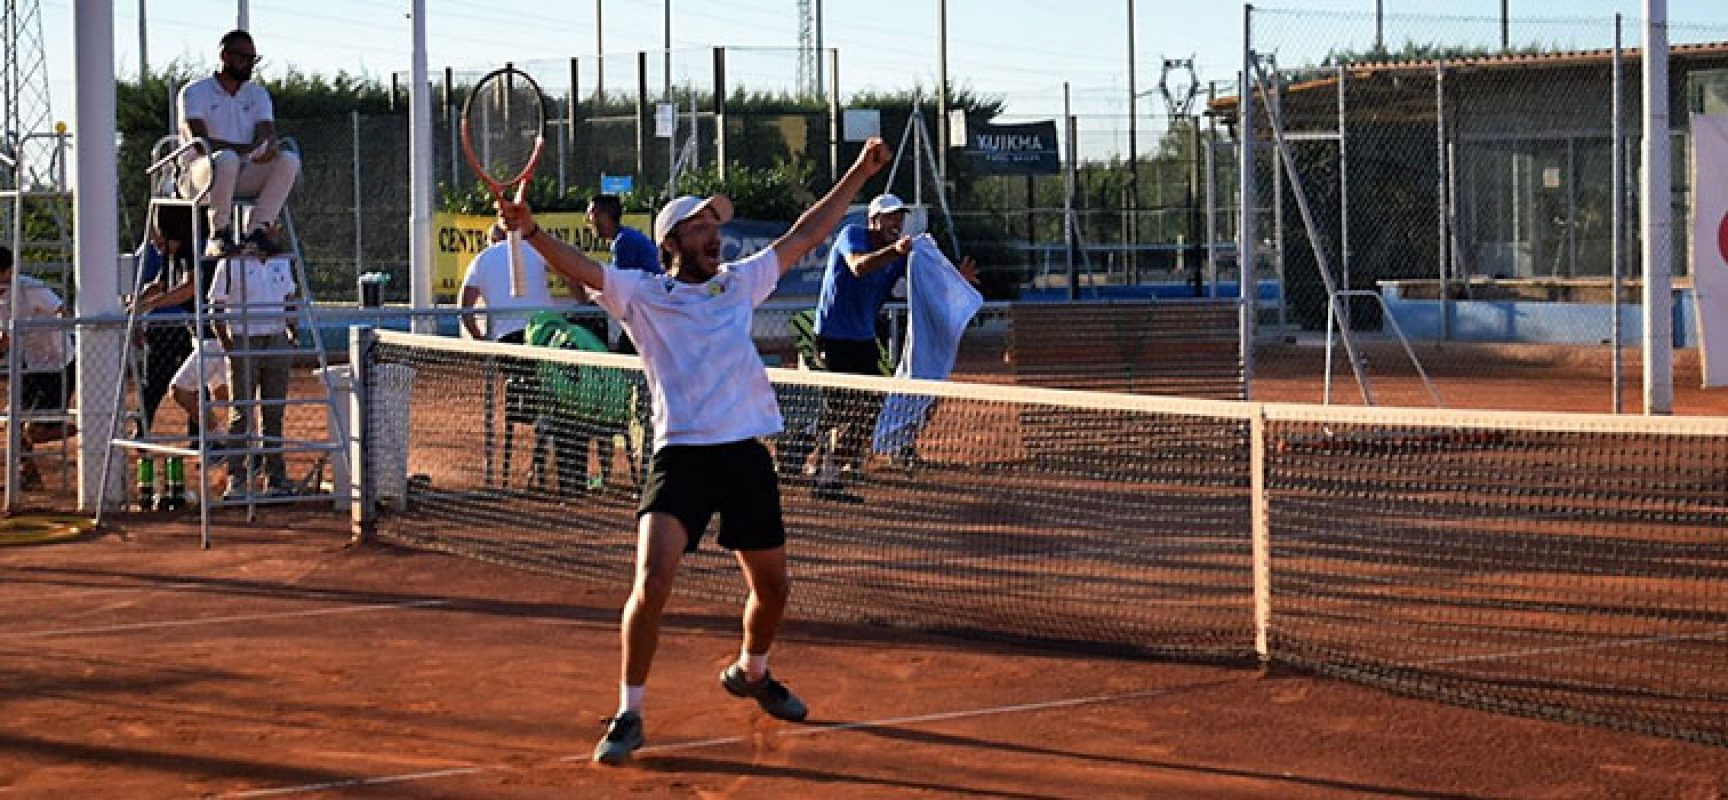 Sporting Tennis Club Bisceglie promosso in serie B al termine di una incredibile rimonta